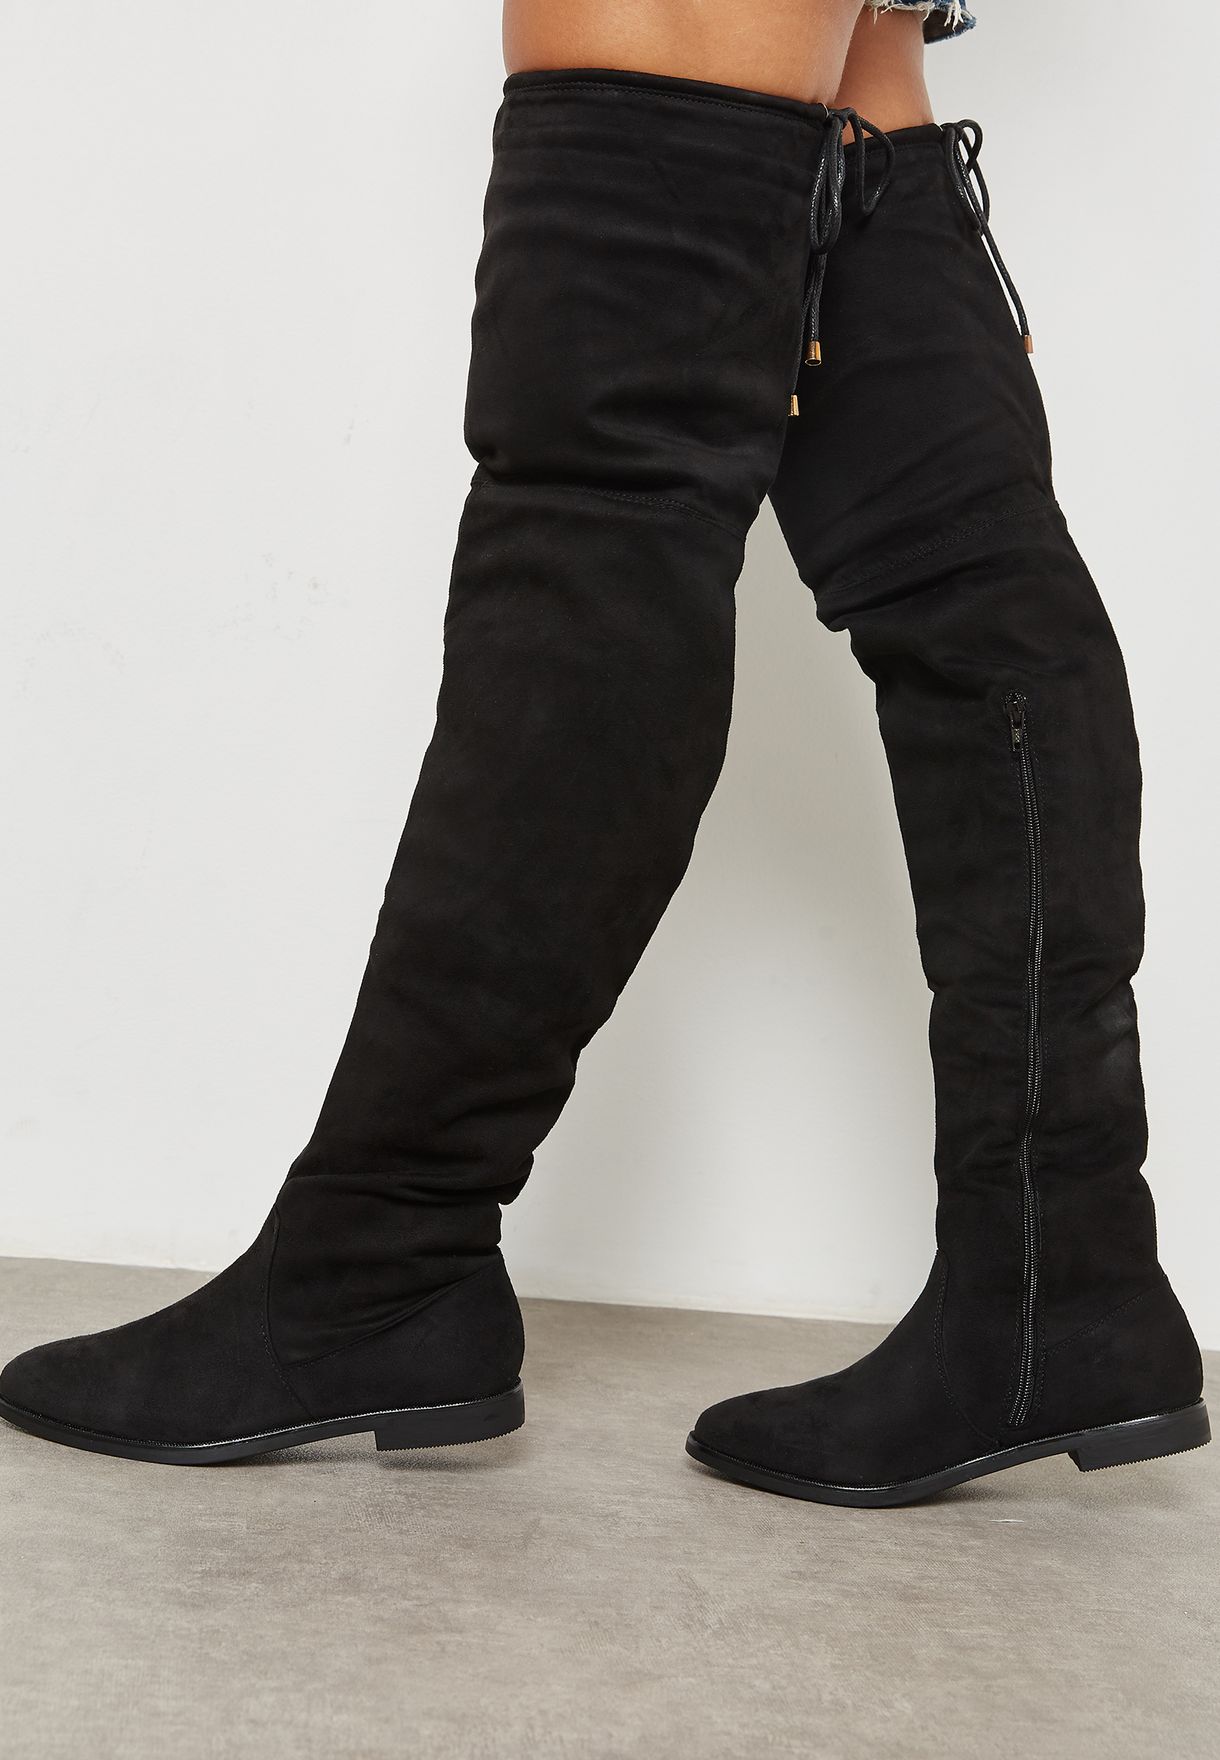 Truffle black Flat Round Toe Knee Boots 